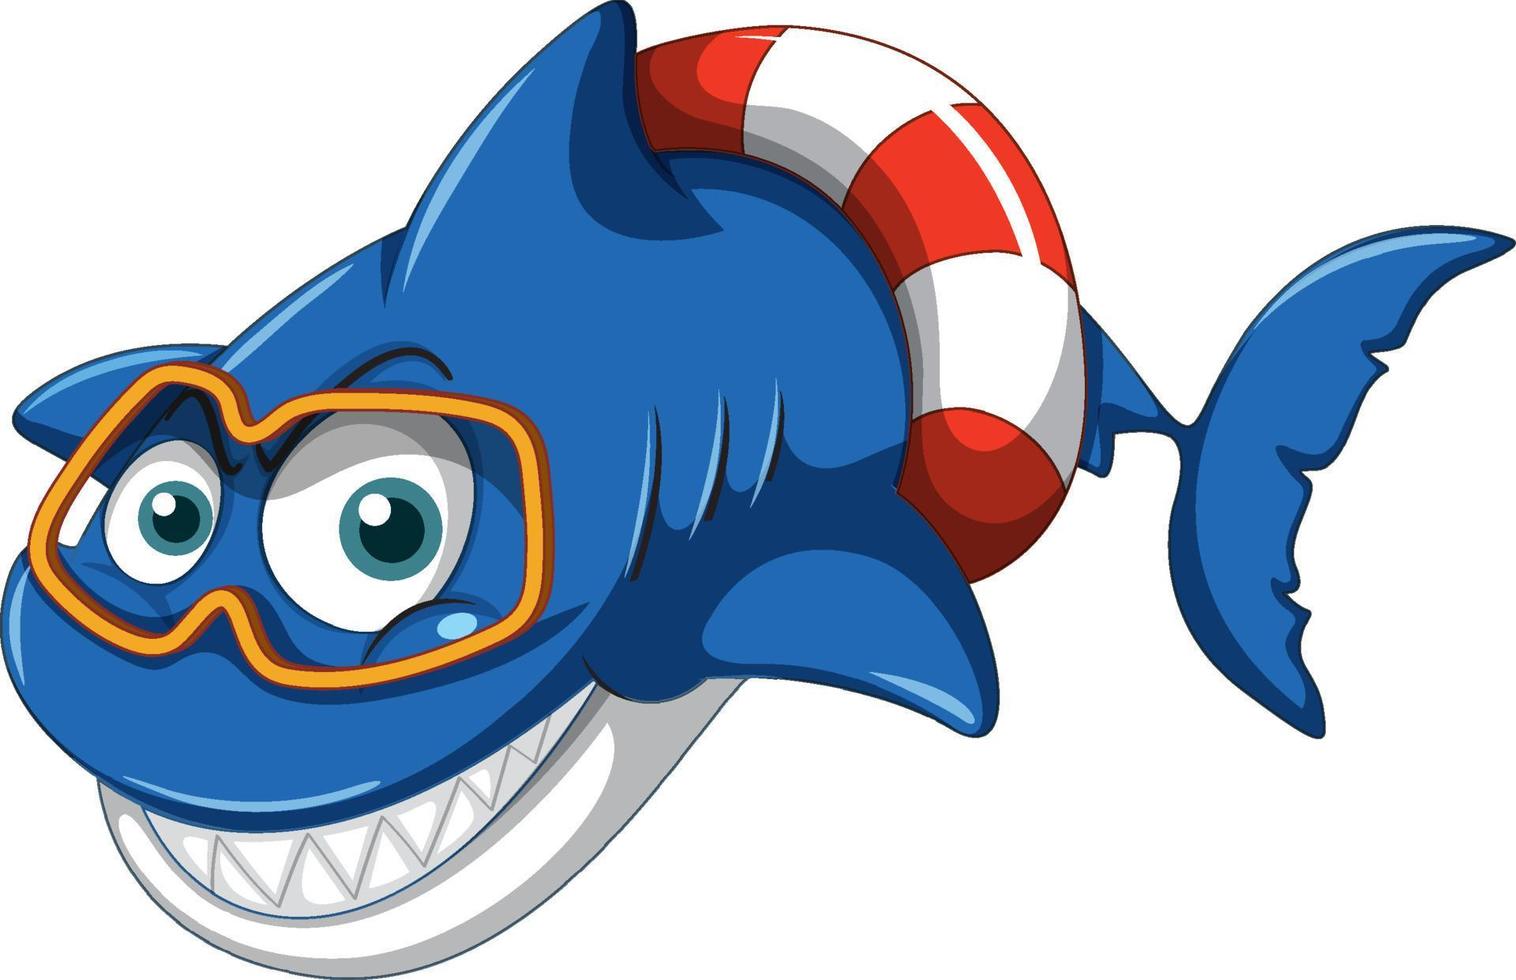 Smiling shark cartoon character vector